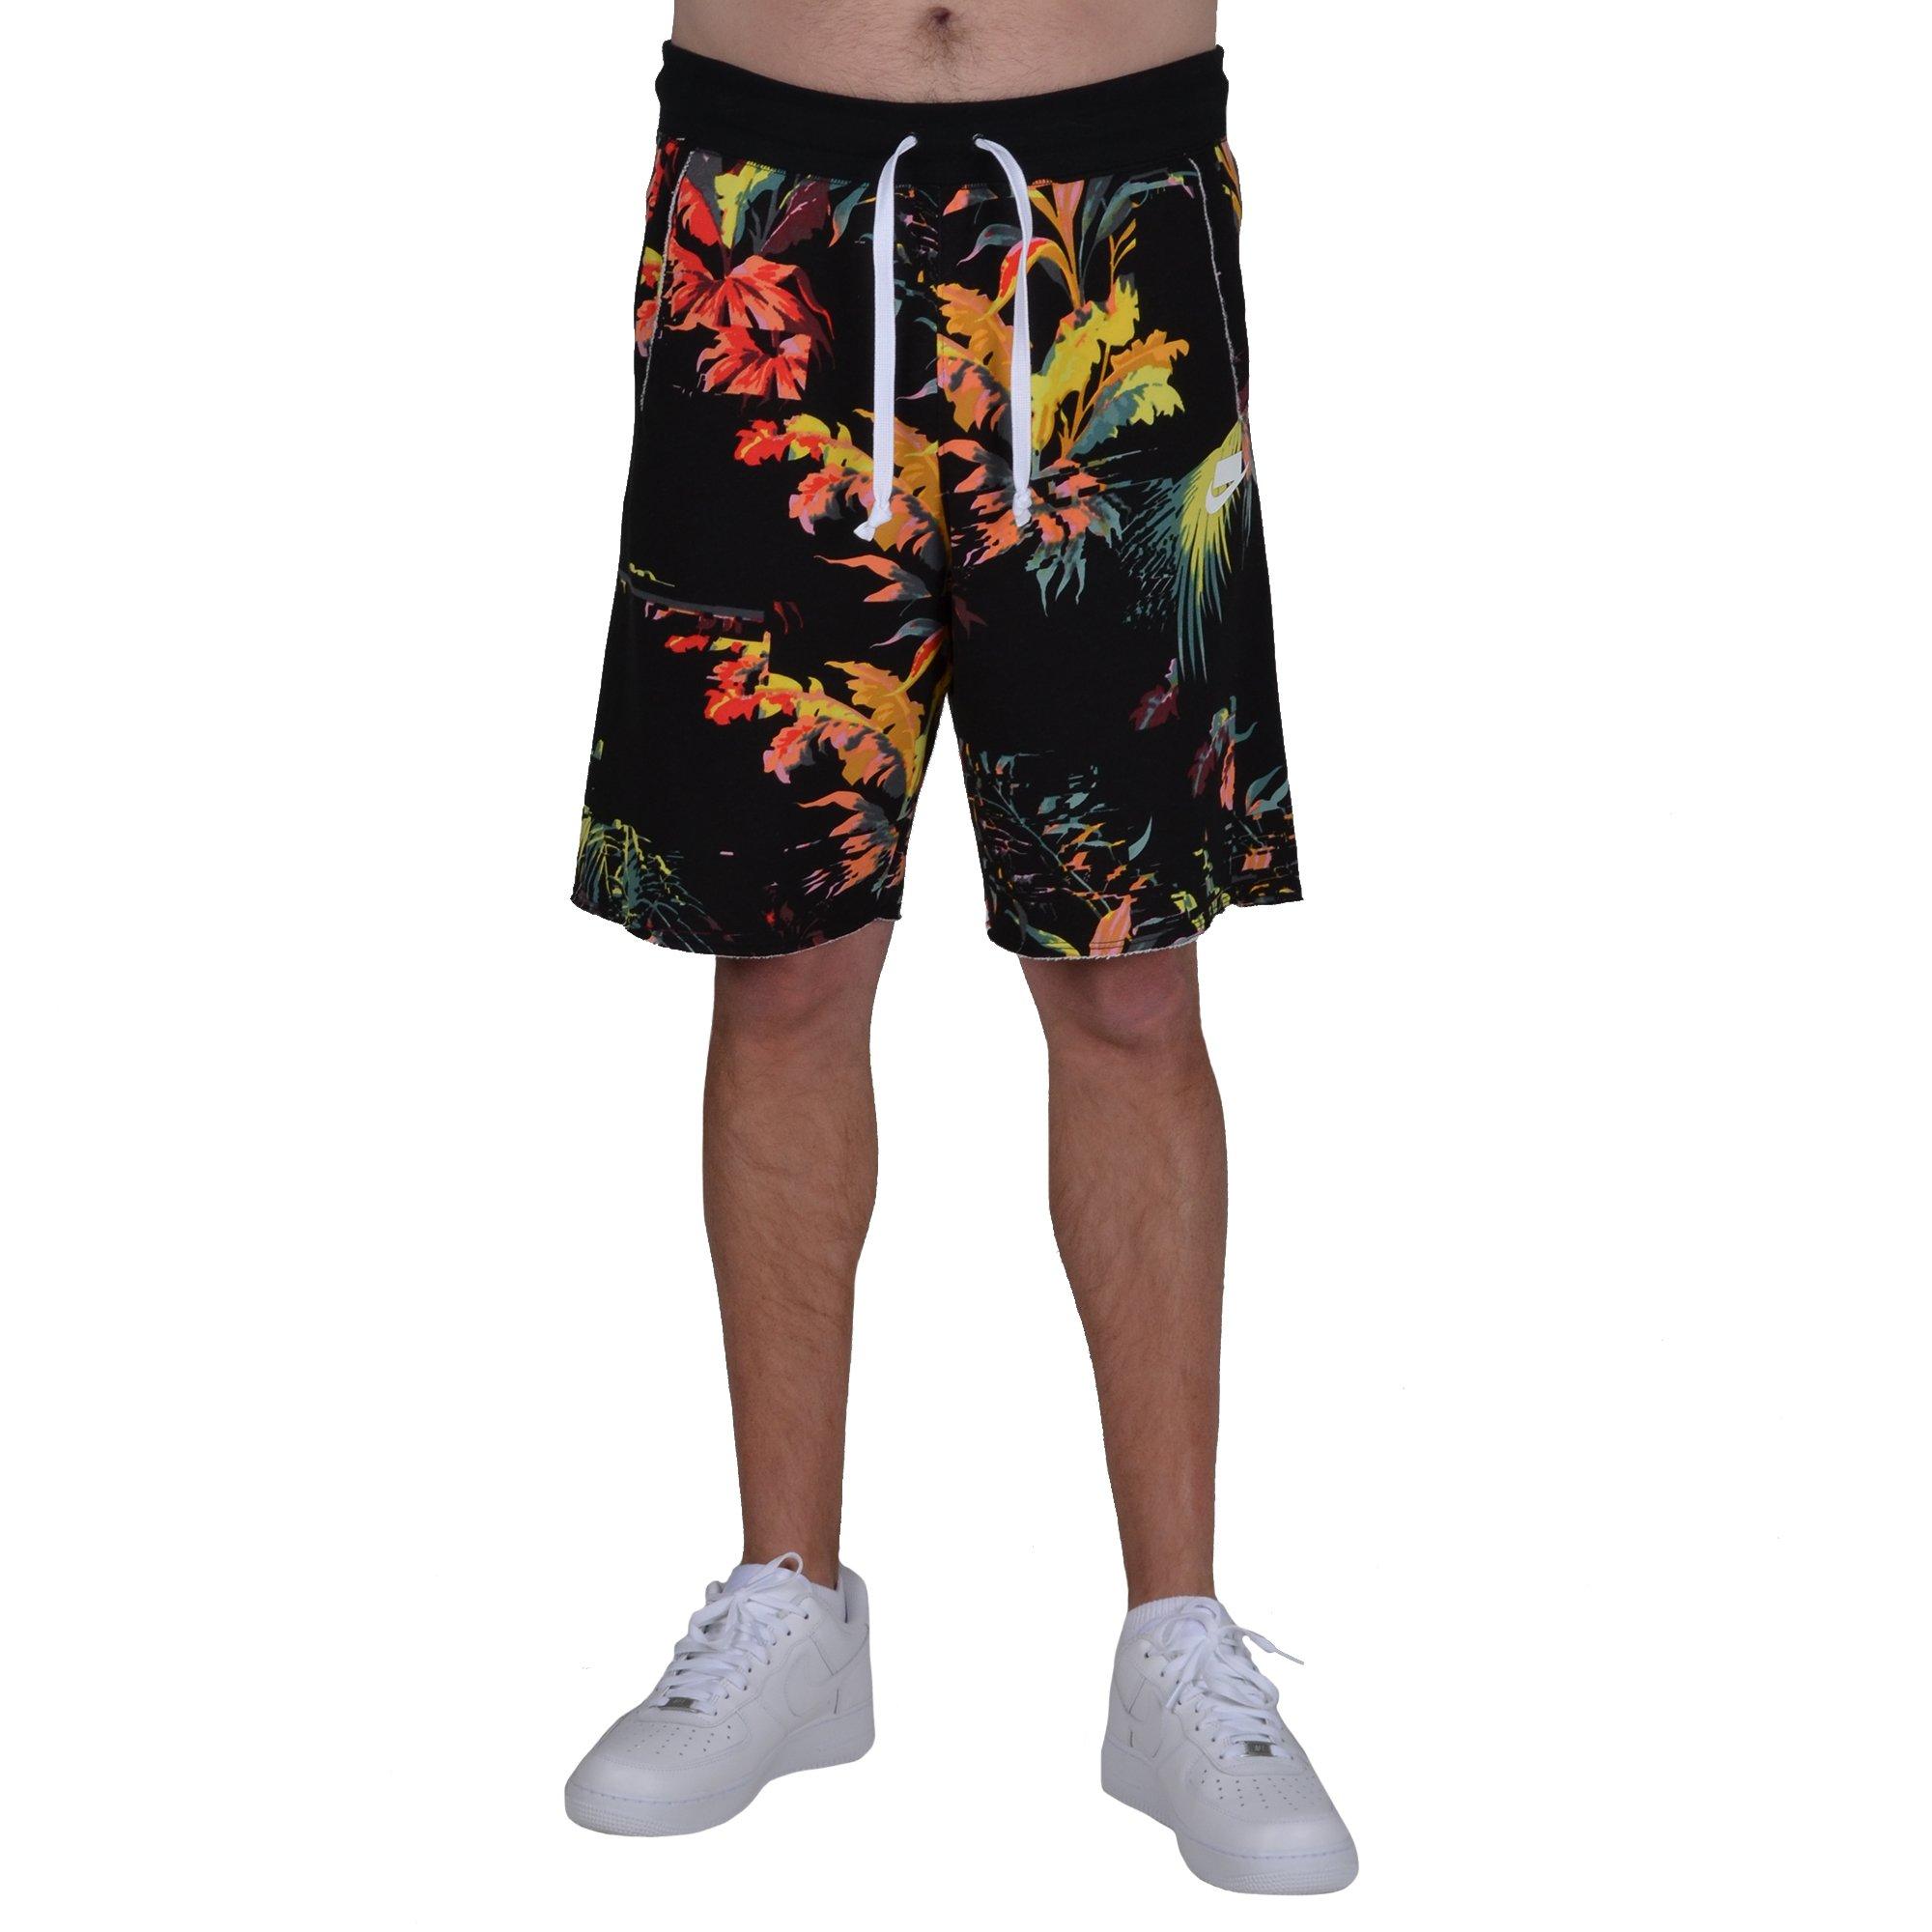 nike flower shorts